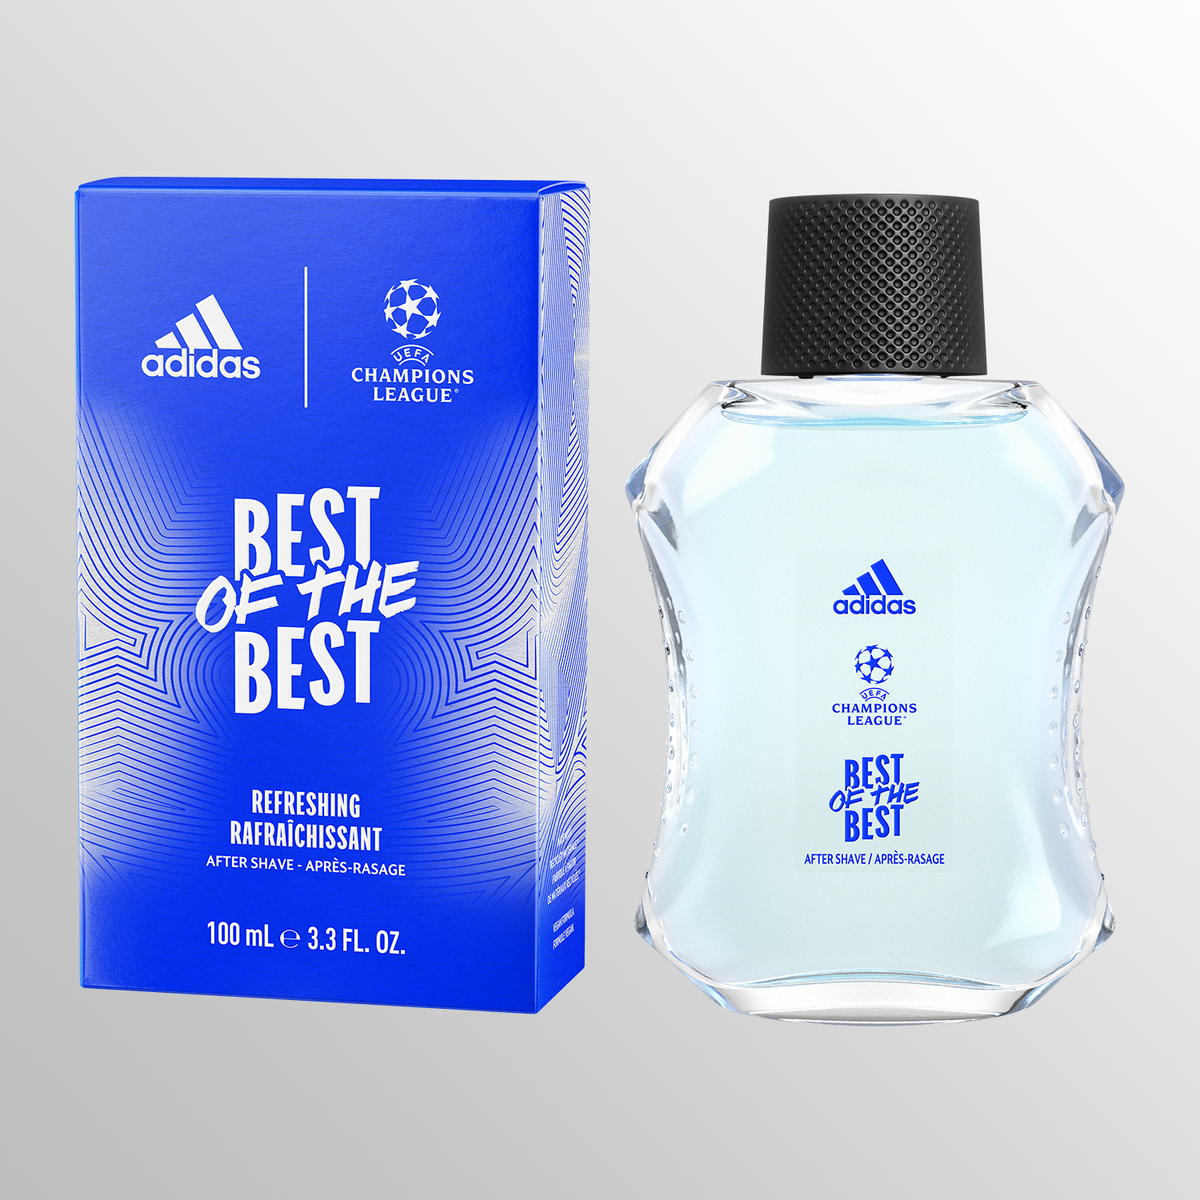 Adidas UEFA Best of the Best Dopobarba 100ml